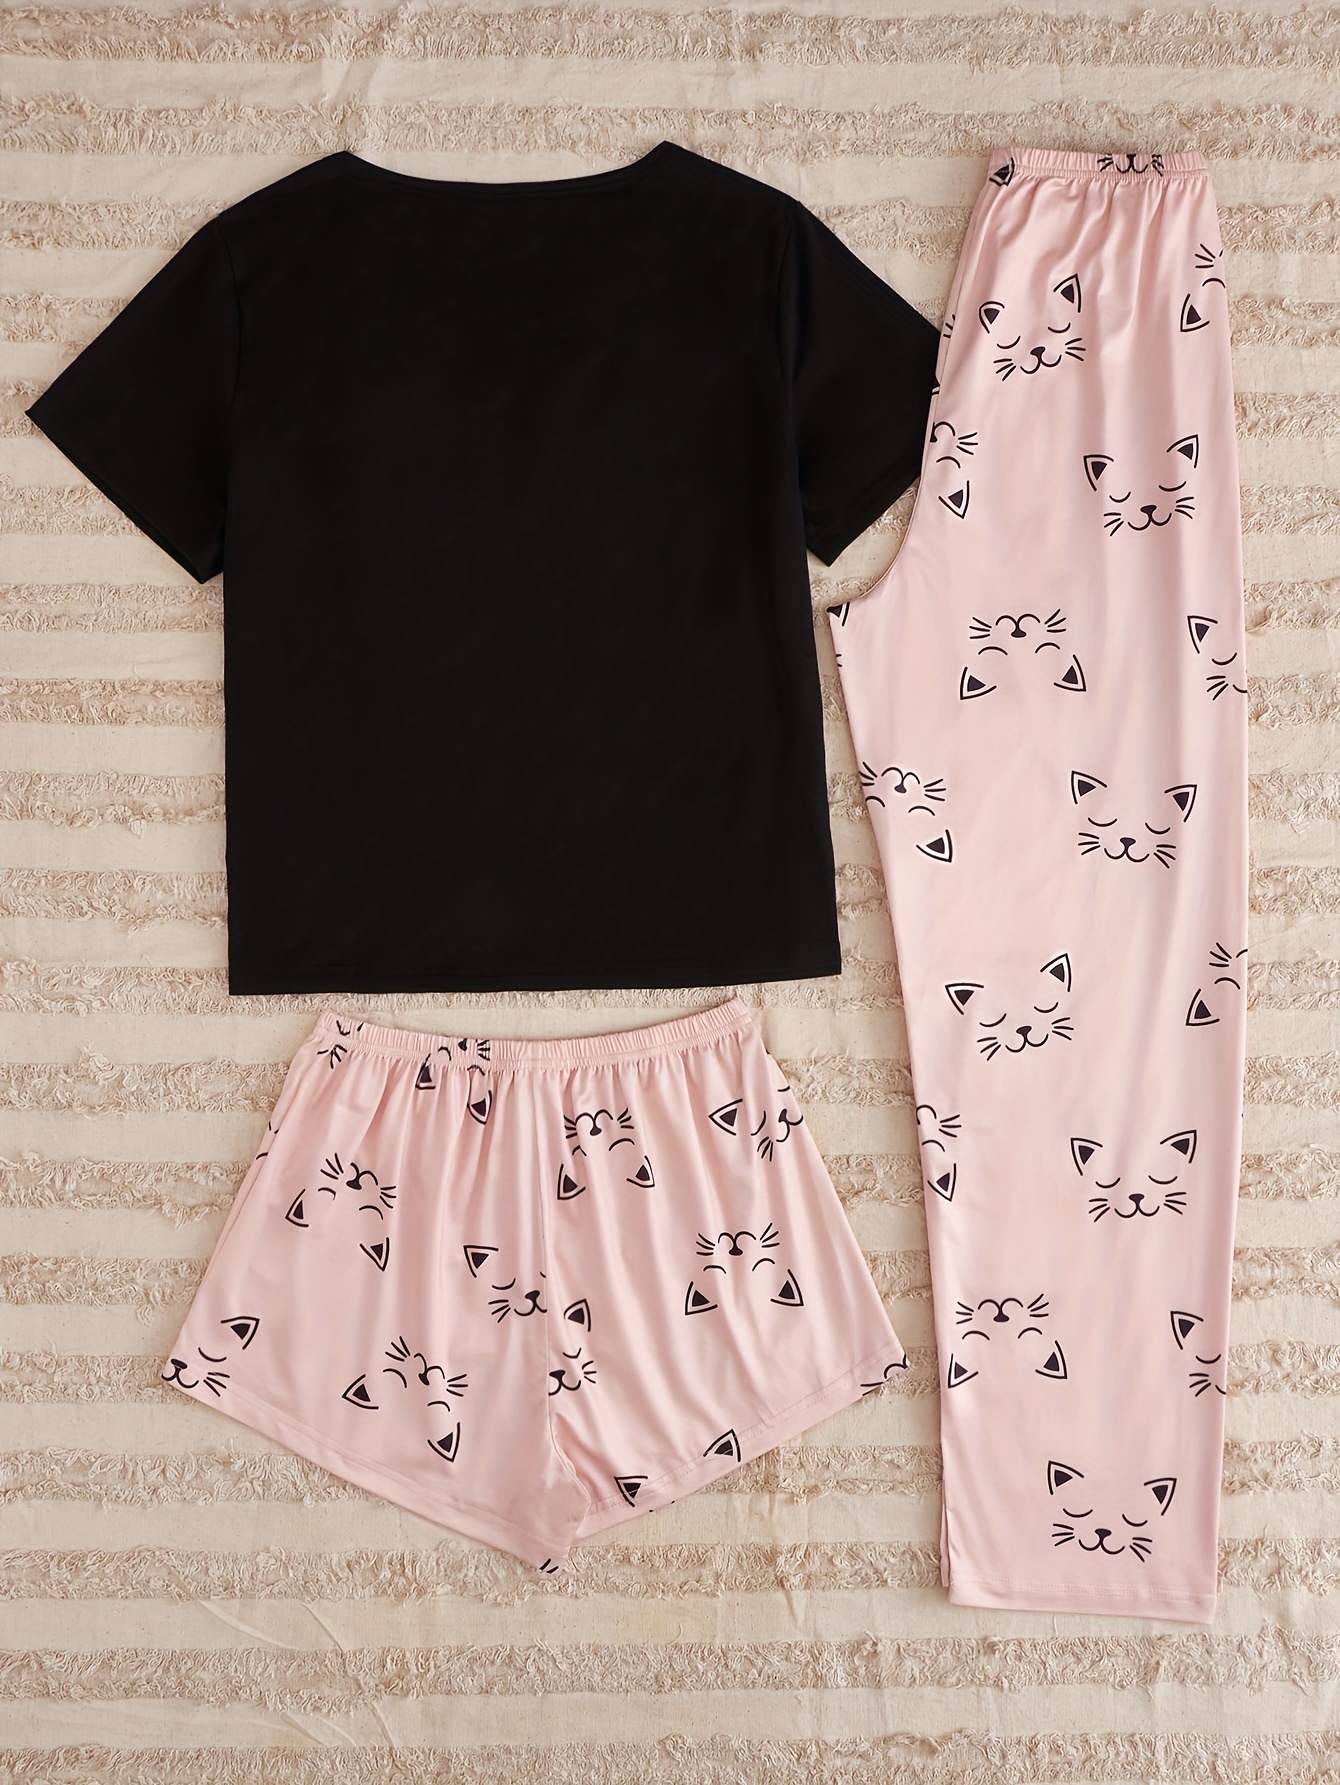 MyFav Women's Cute Cartoon Print Tee and Shorts Pajama Set,XL